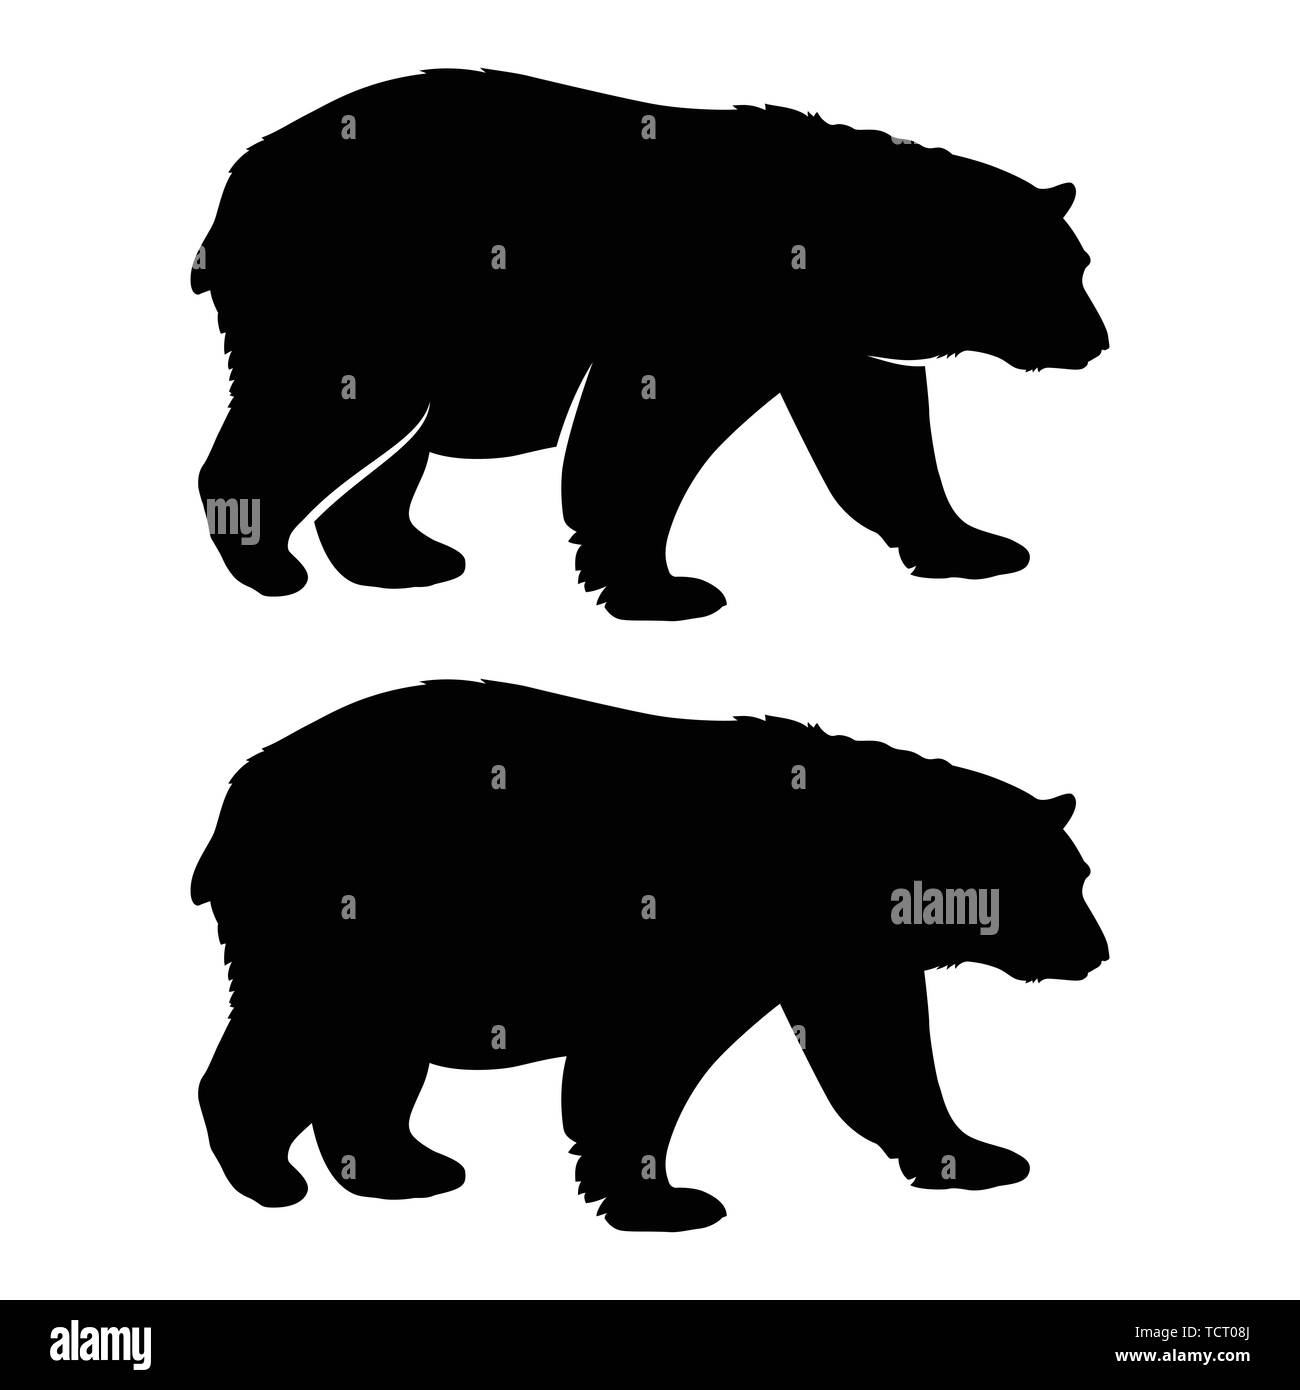 Bear silhouette. Vector illustration Stock Vector